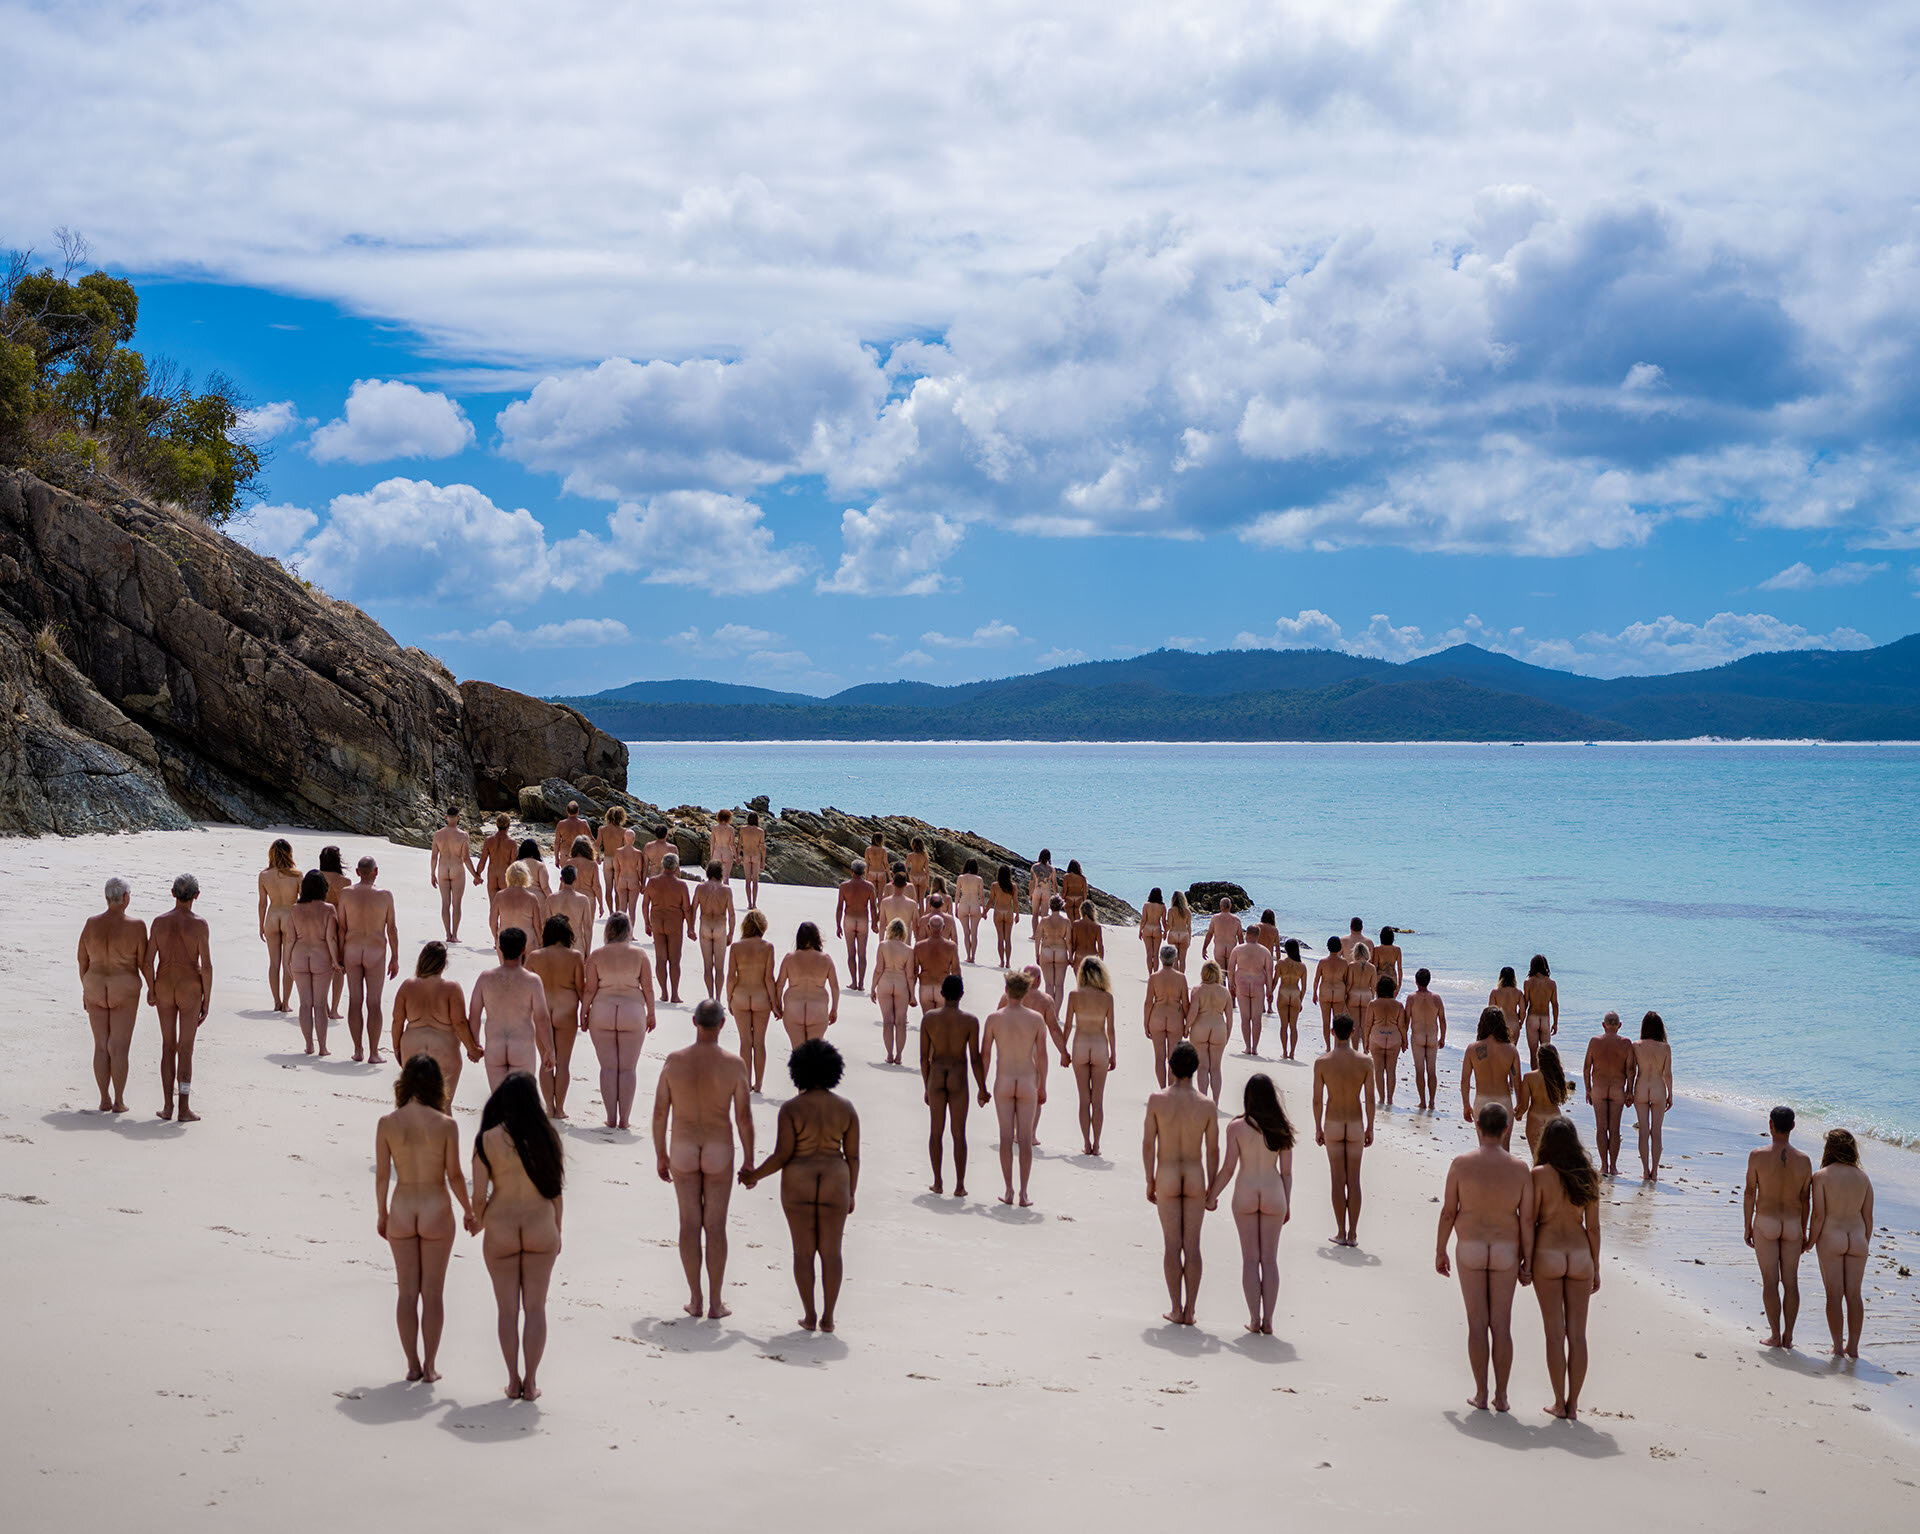 Naked pictures of people 🍓 ФотоТелеграф " Обнаженные люди в 